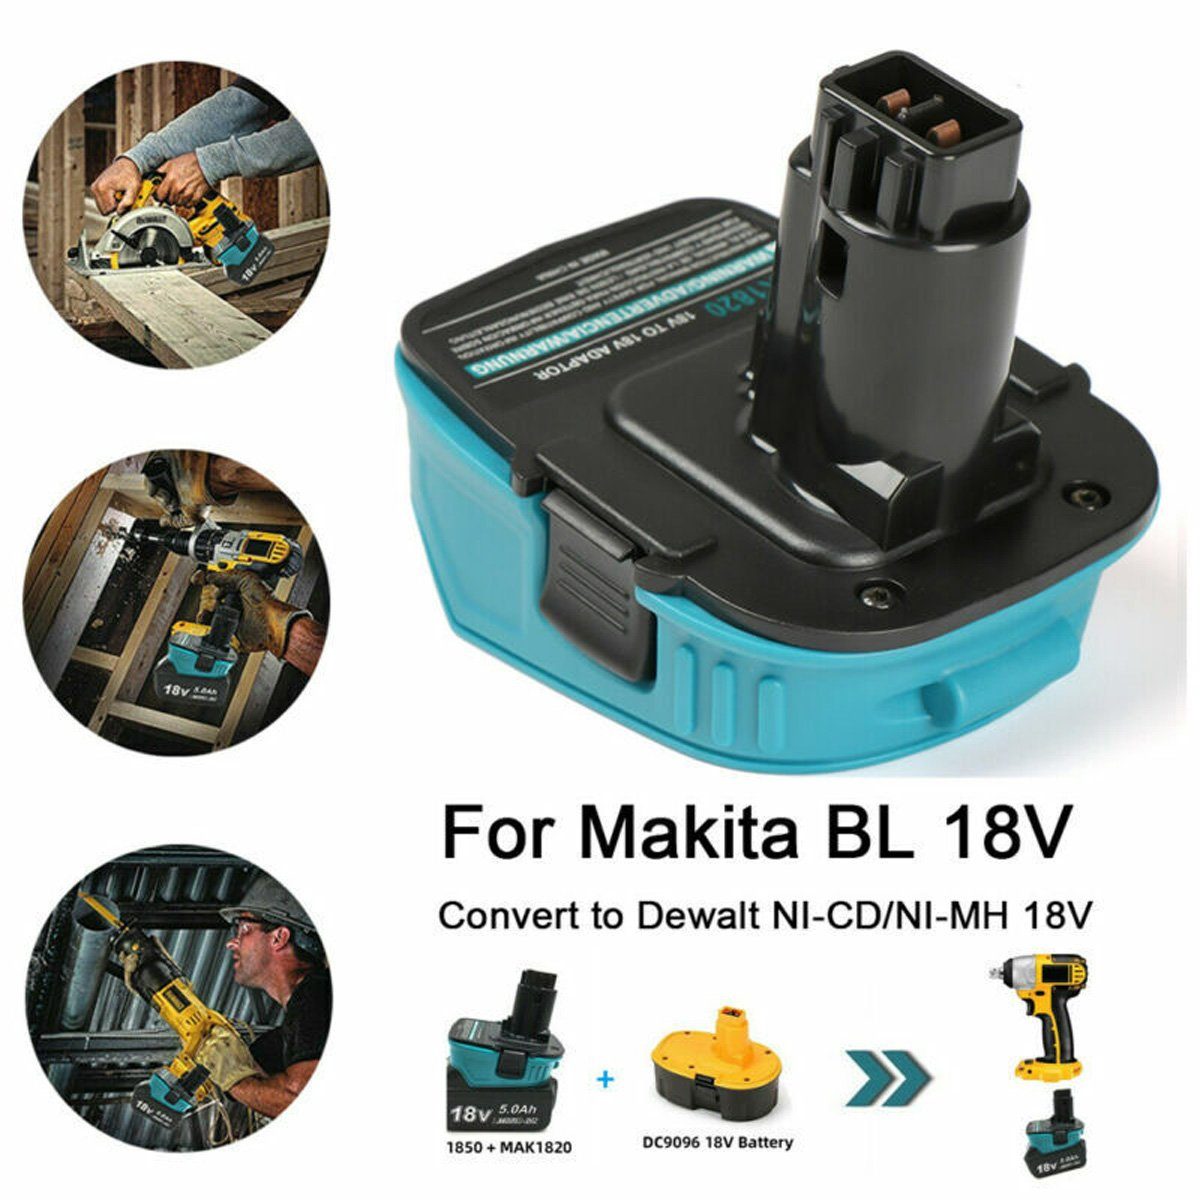 götäzer Elektrowerkzeug-Set MAK1820 18V Akku-Adapter, 1-tlg., Für die Umrüstung auf Dewalt Ni-Cd/Ni-MH-Akkus